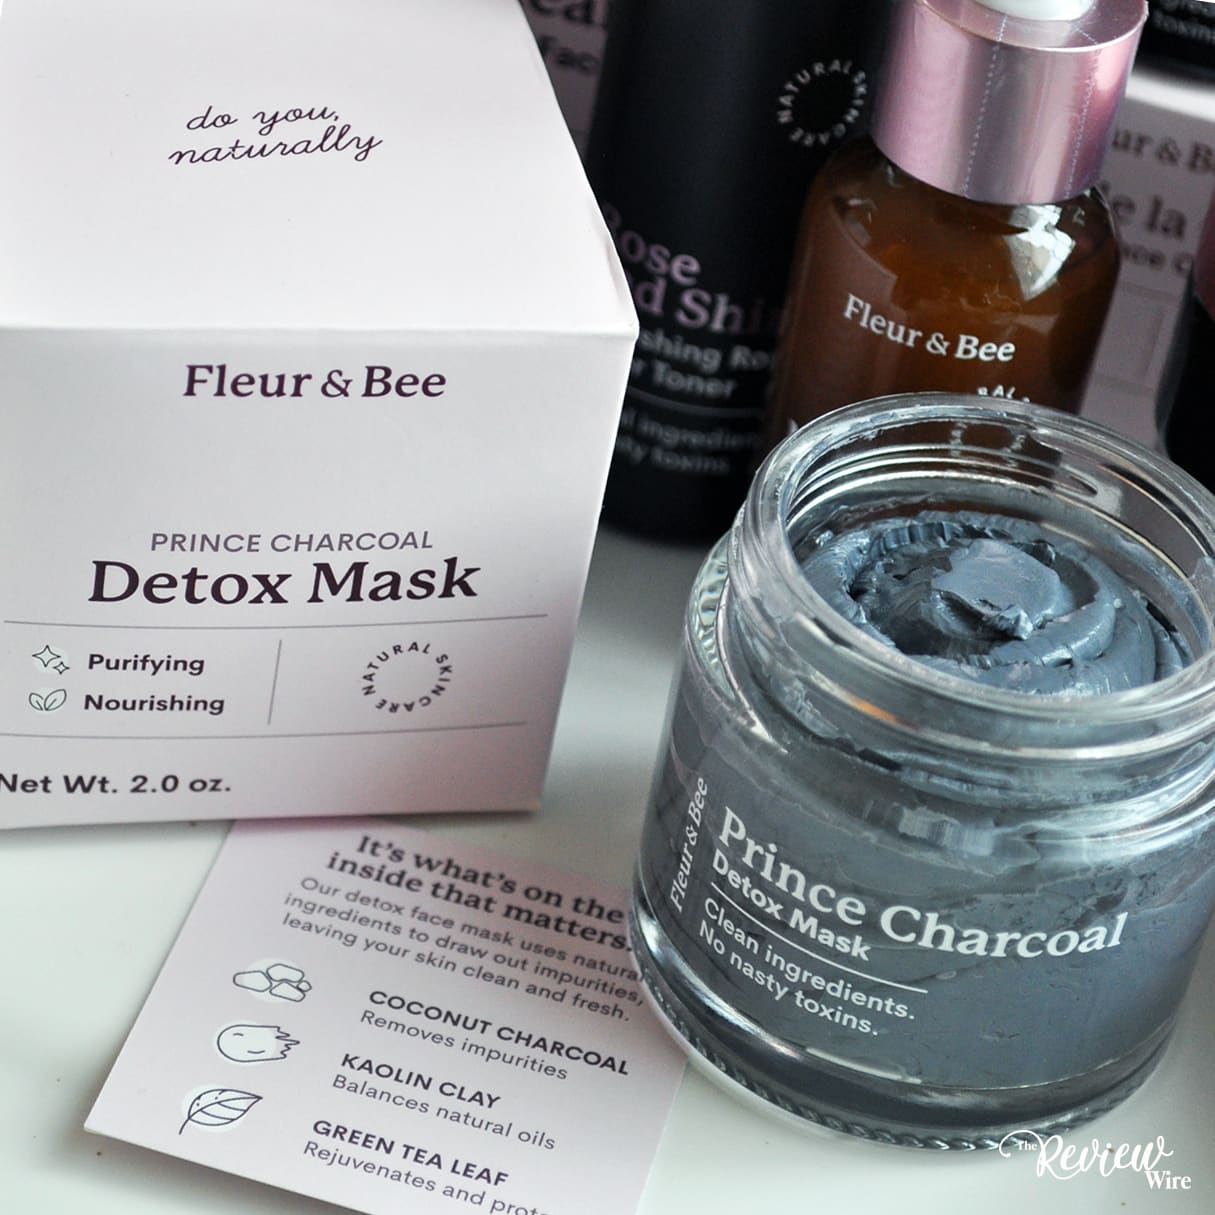 Fleur & Bee Prince Charcoal Detox Mask